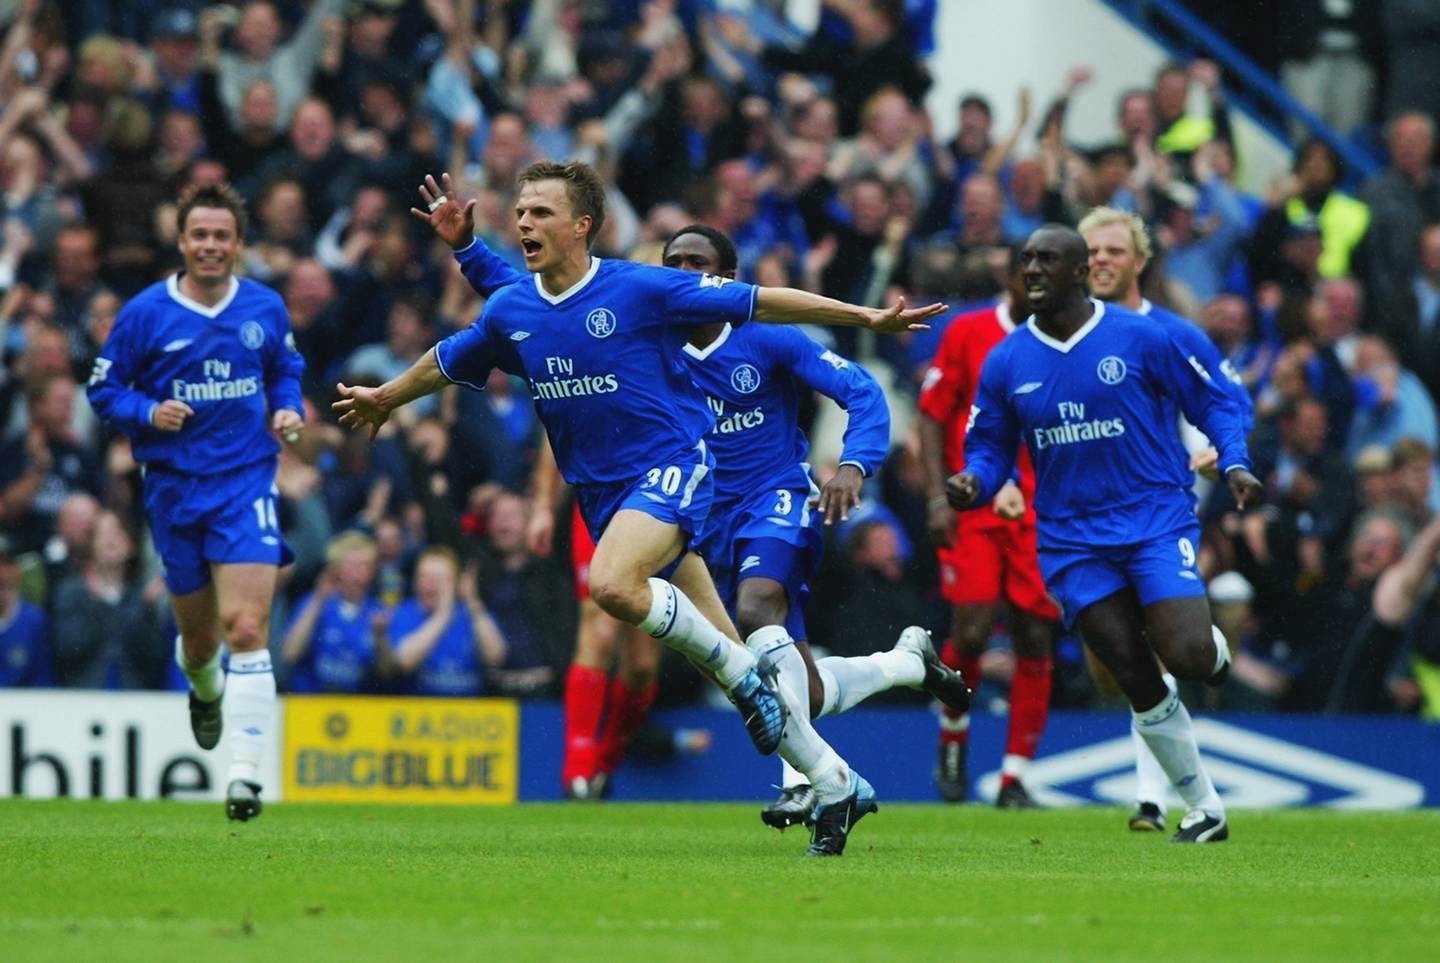 Jesper Gronkjaer of Chelsea celebrates scoring the winning goal during against Liverpool on May 11, 2003 at Stamford Bridge. Getty